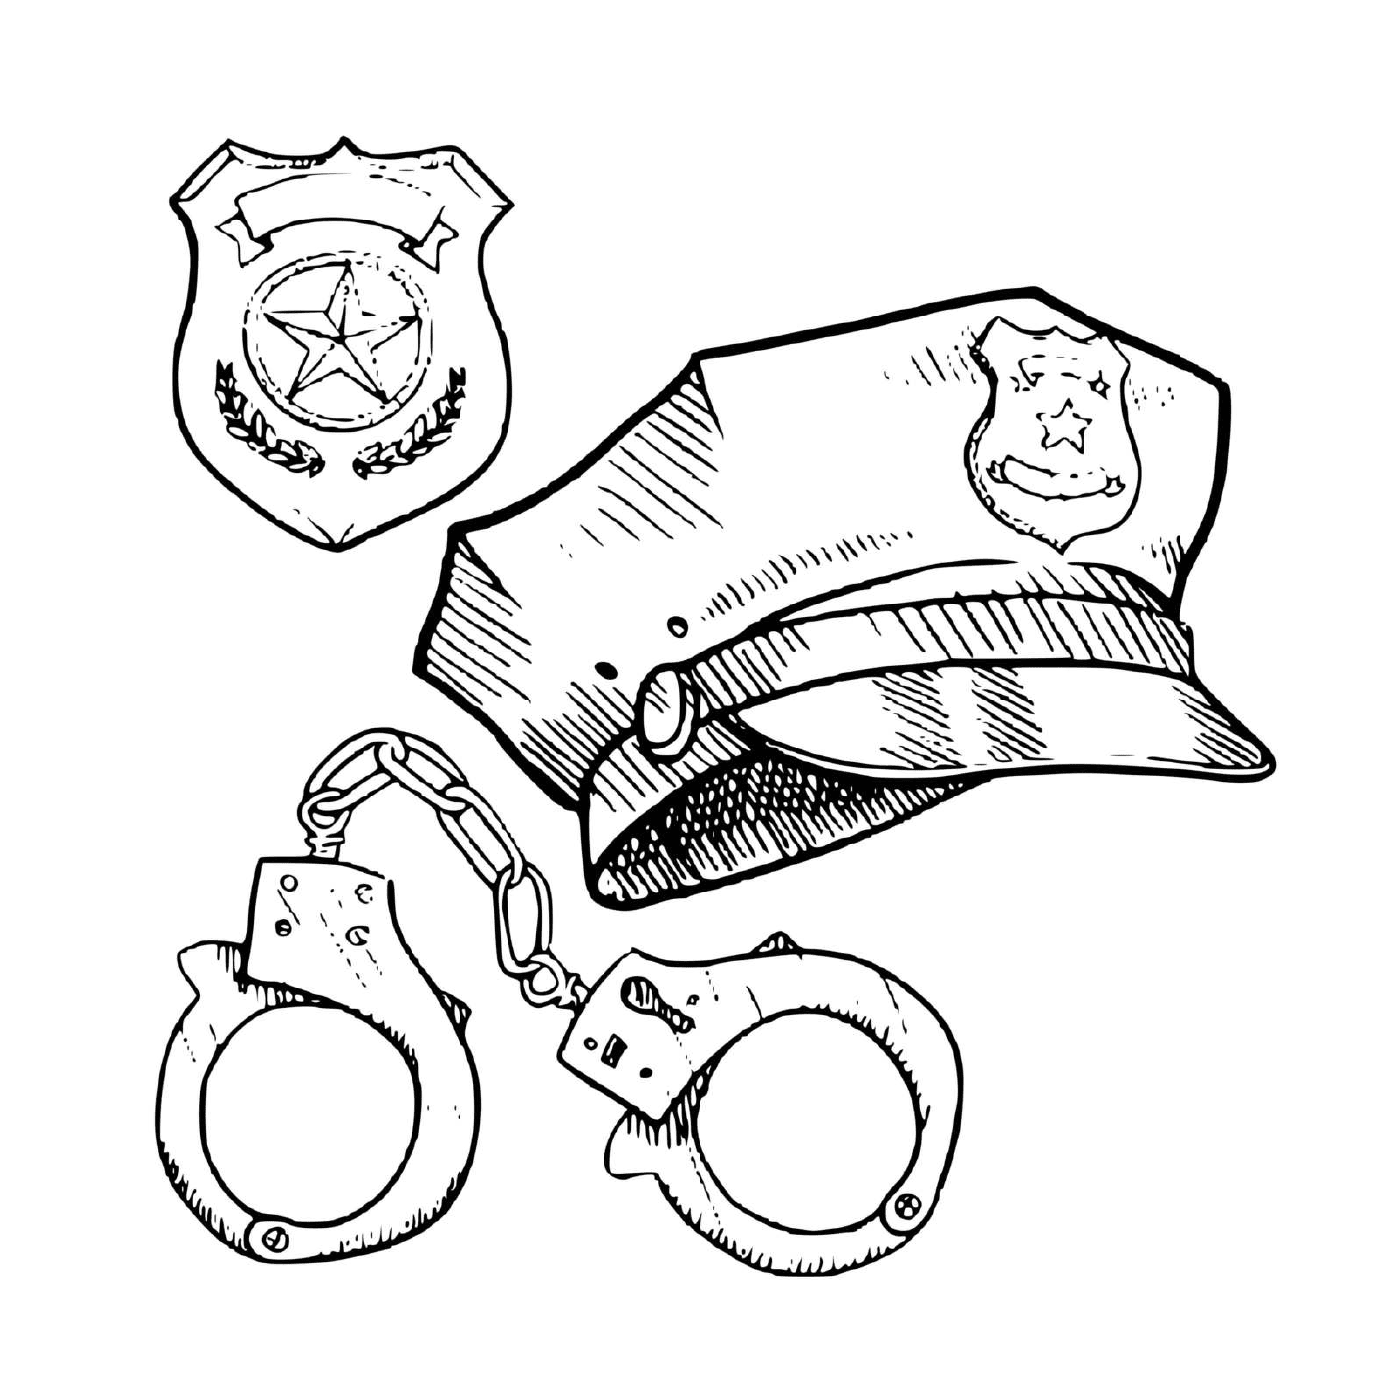  Police equipment: cap, handcuffs 